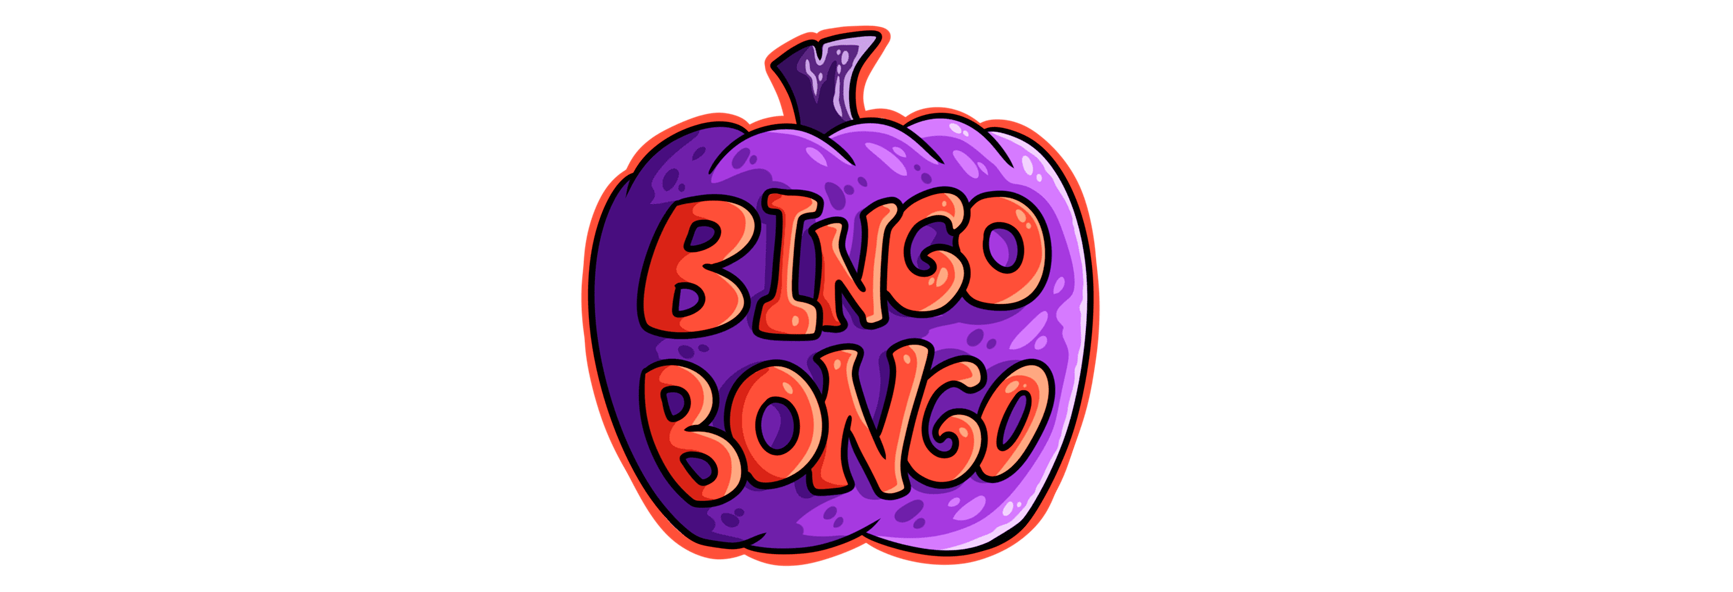 Bingo Bongo by Nestiboy99